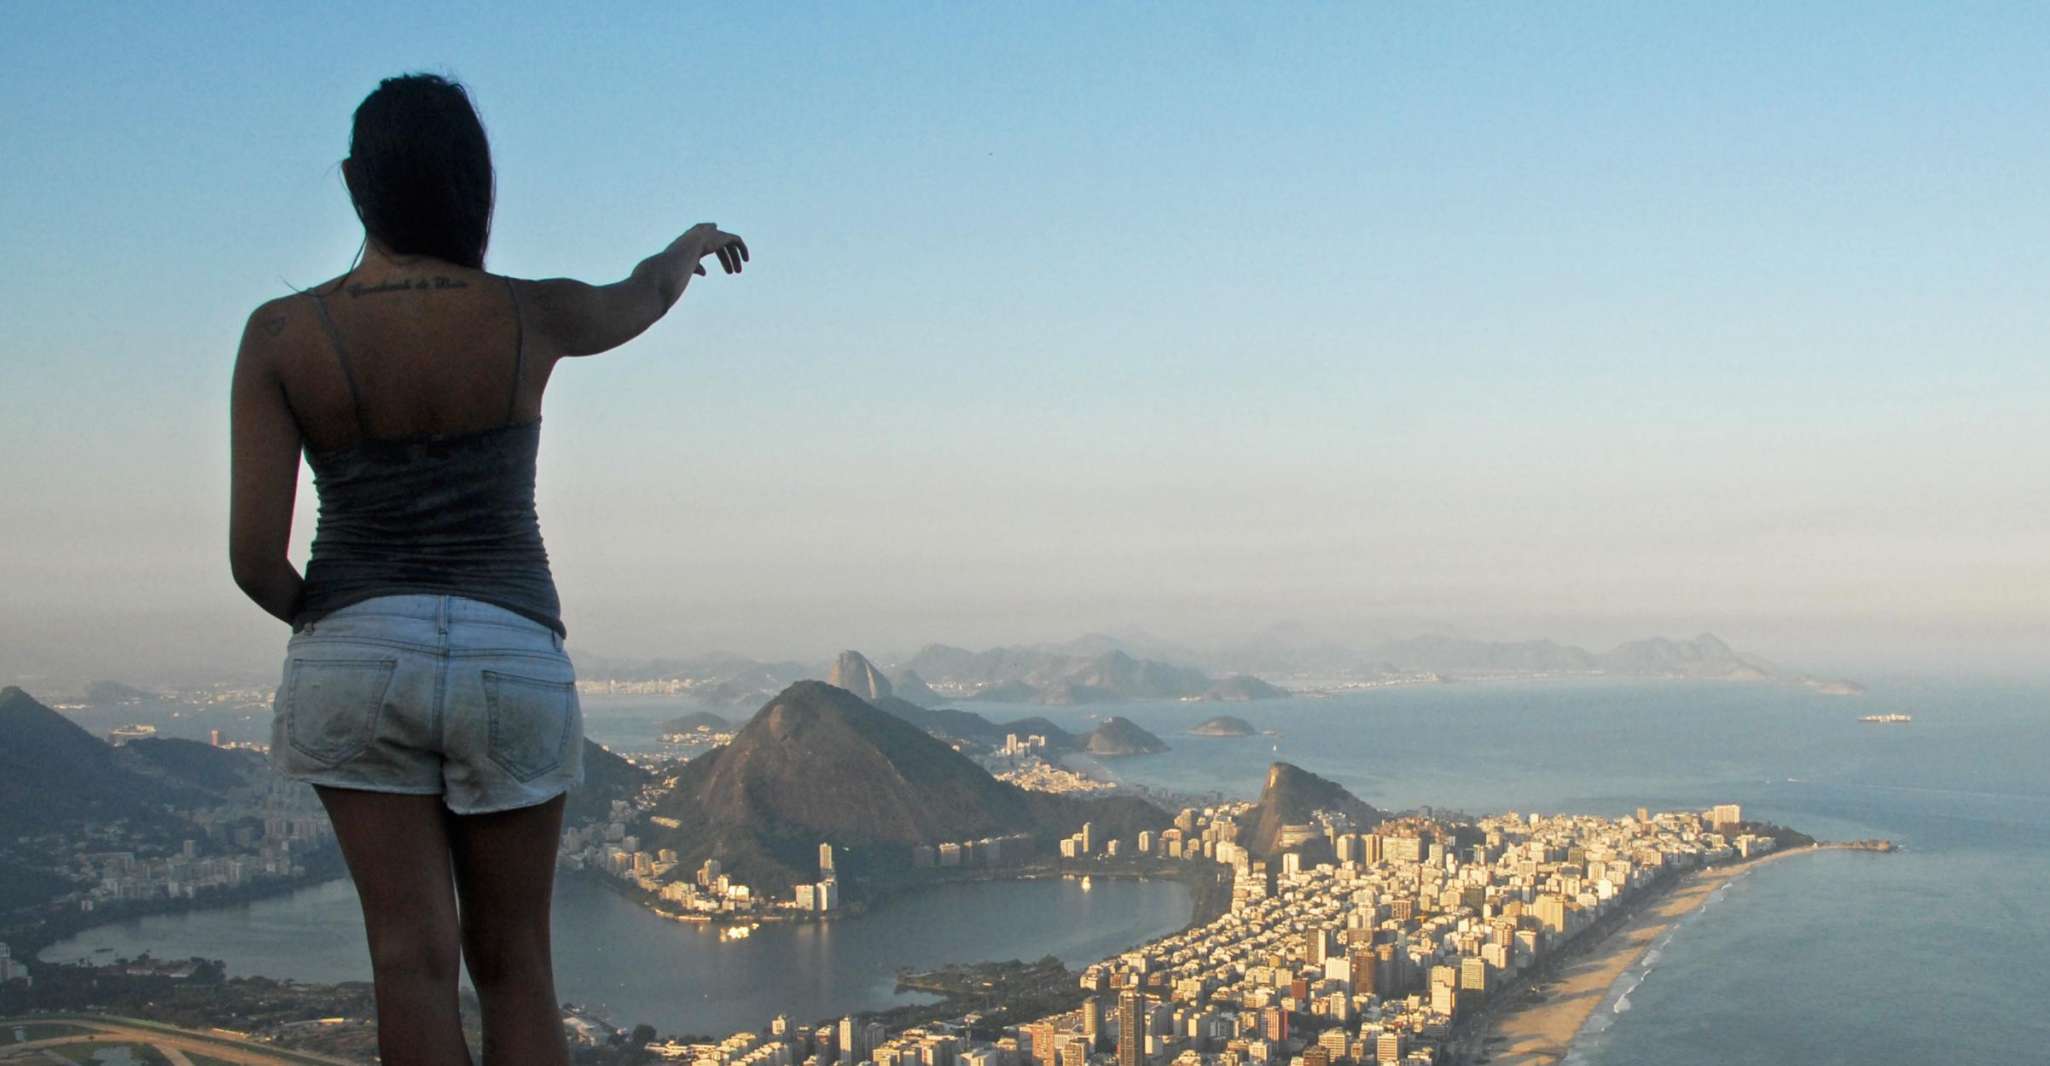 Rio de Janeiro, Vidigal Favela Tour and Two Brothers Hike - Housity